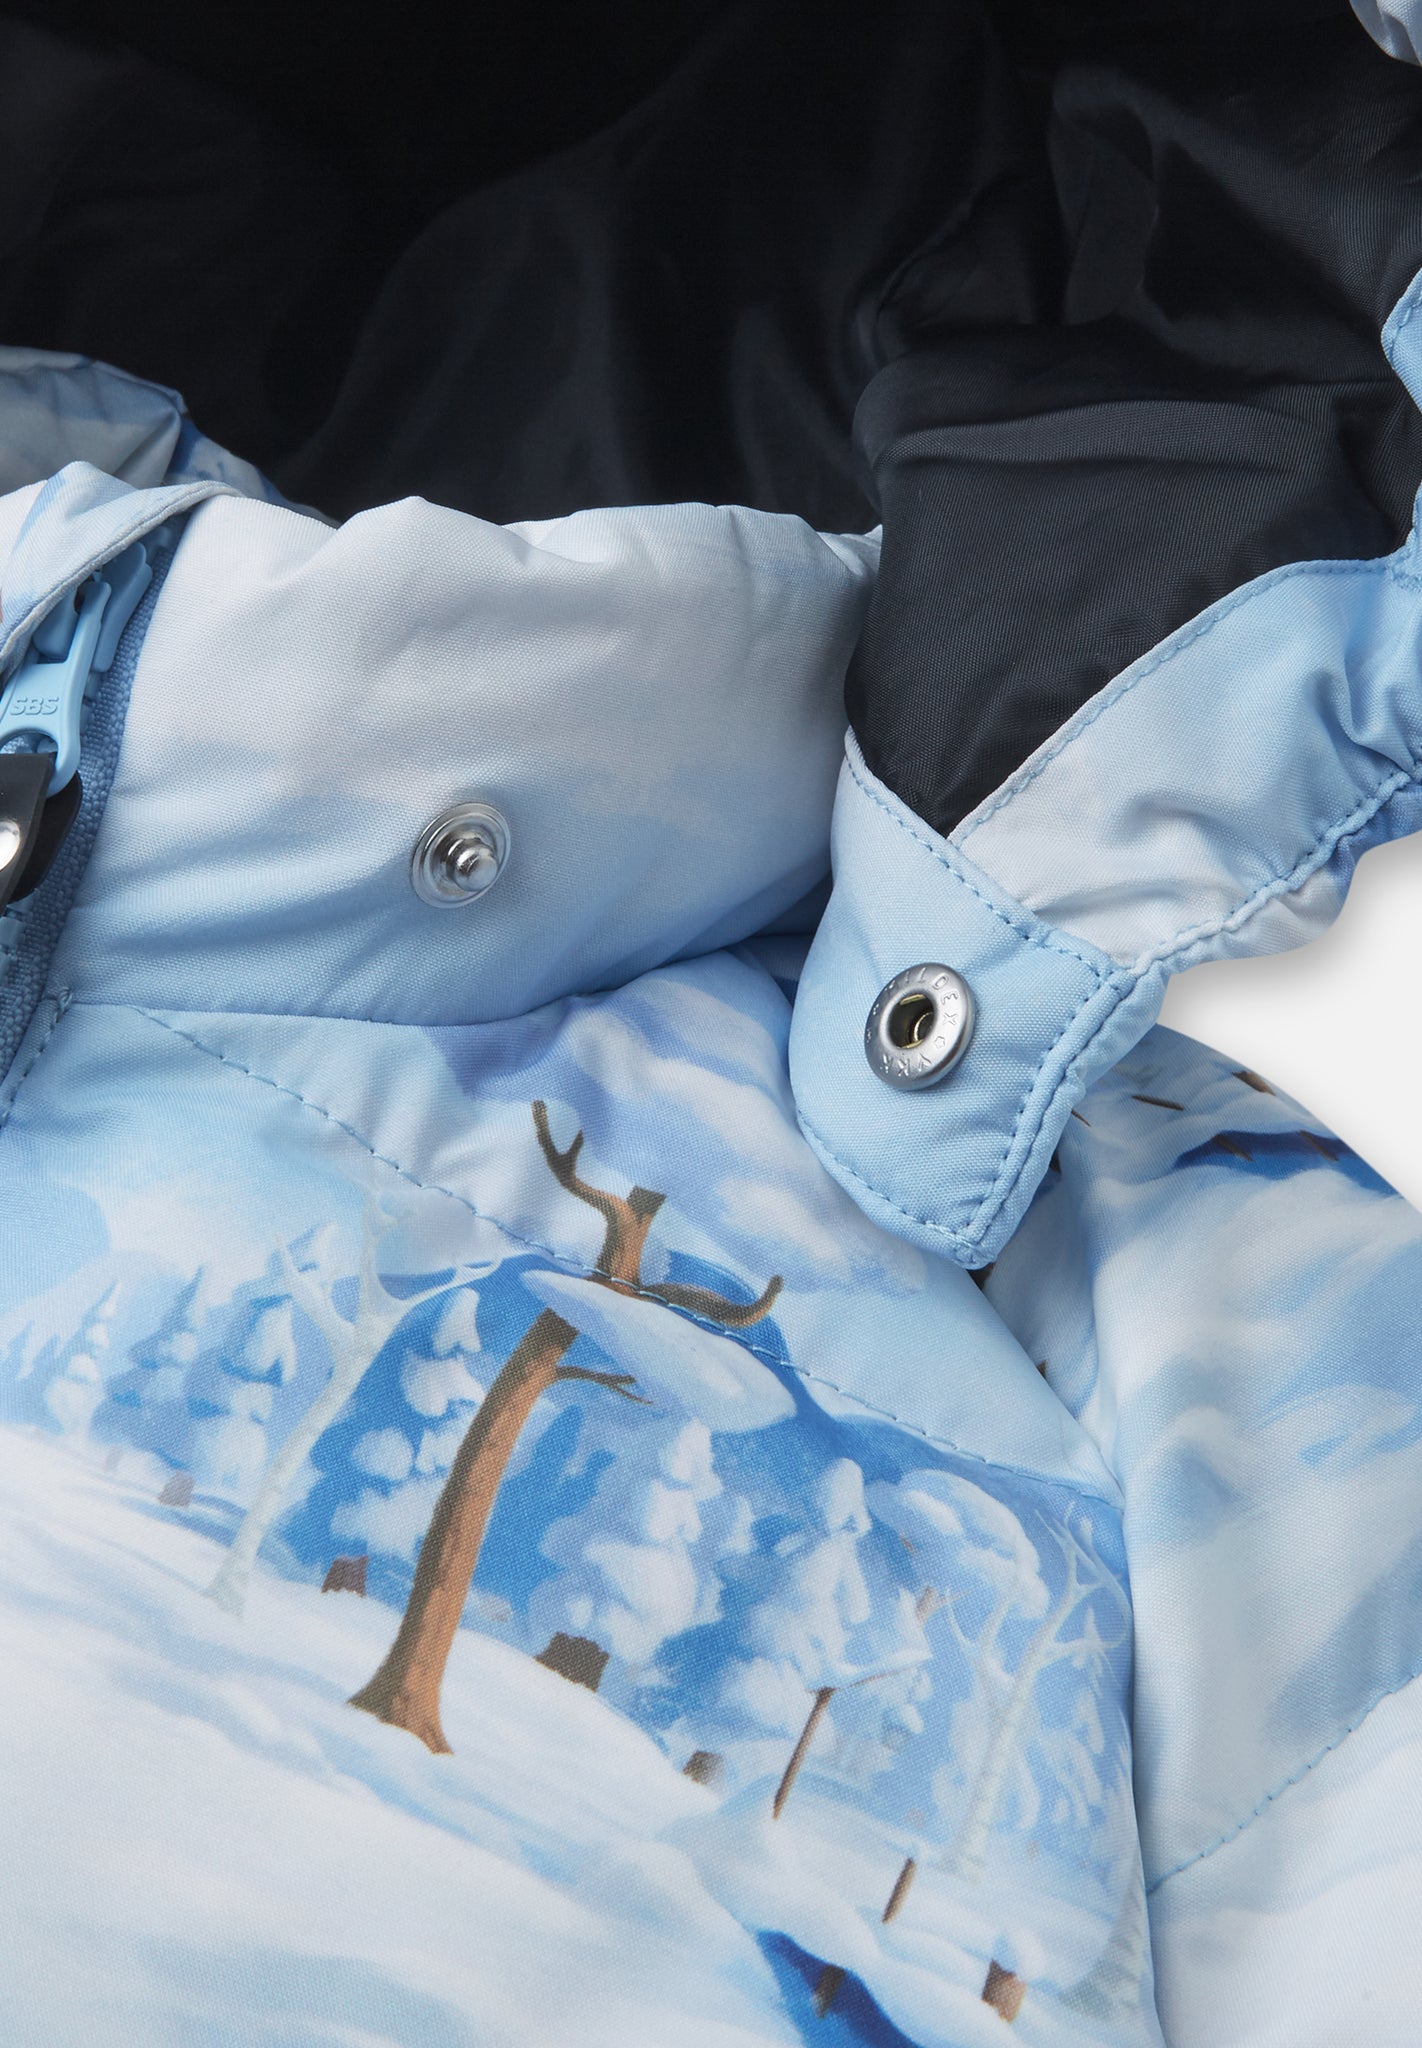 Zimná bunda Reima Moomin Lykta